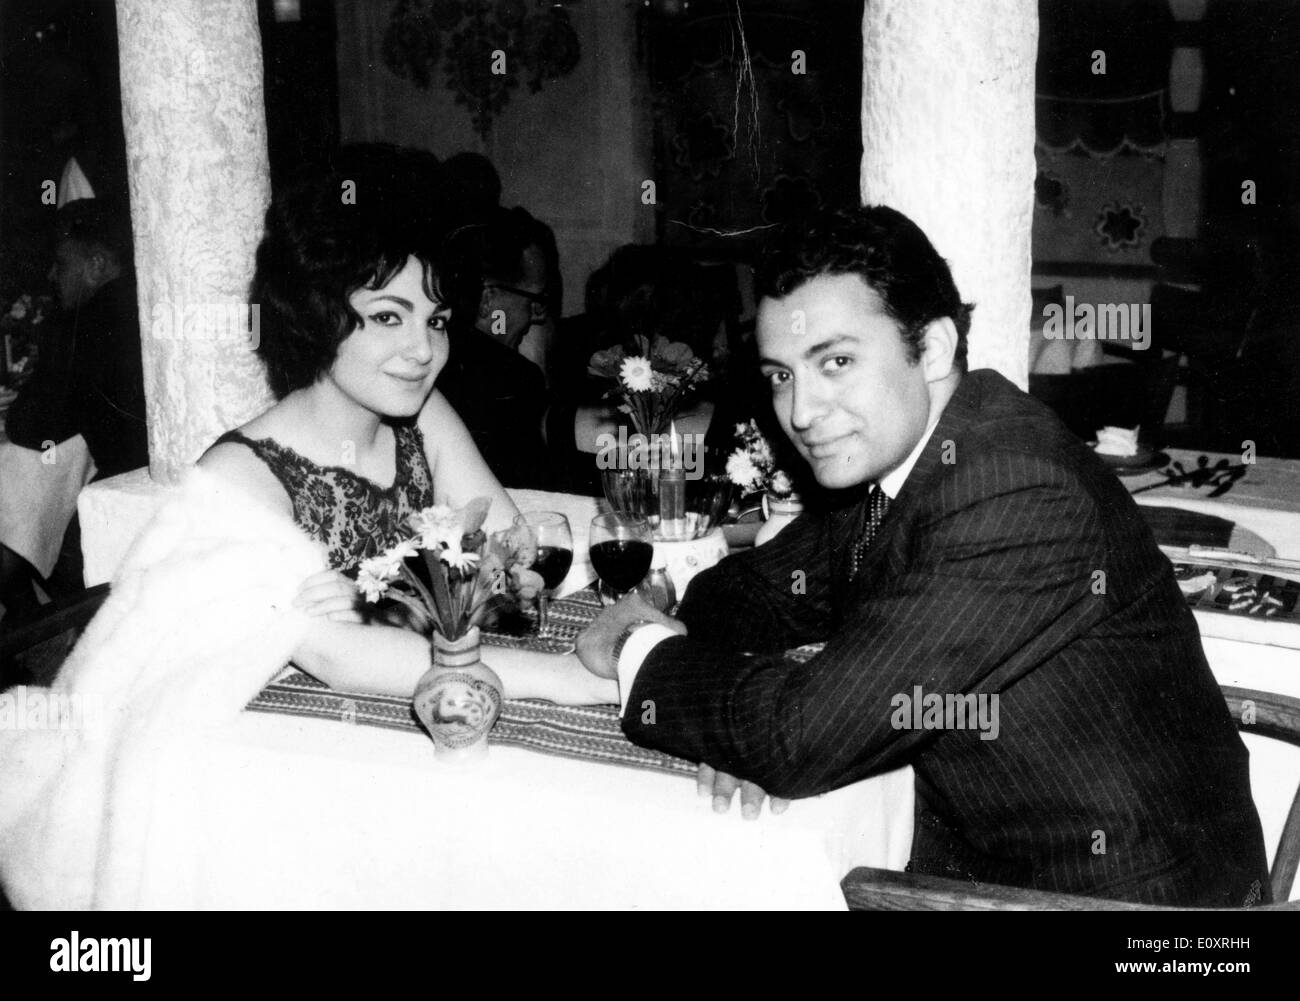 Teresa Stratas and fiancé Zubin Mehta dining at a restaurant Stock Photo